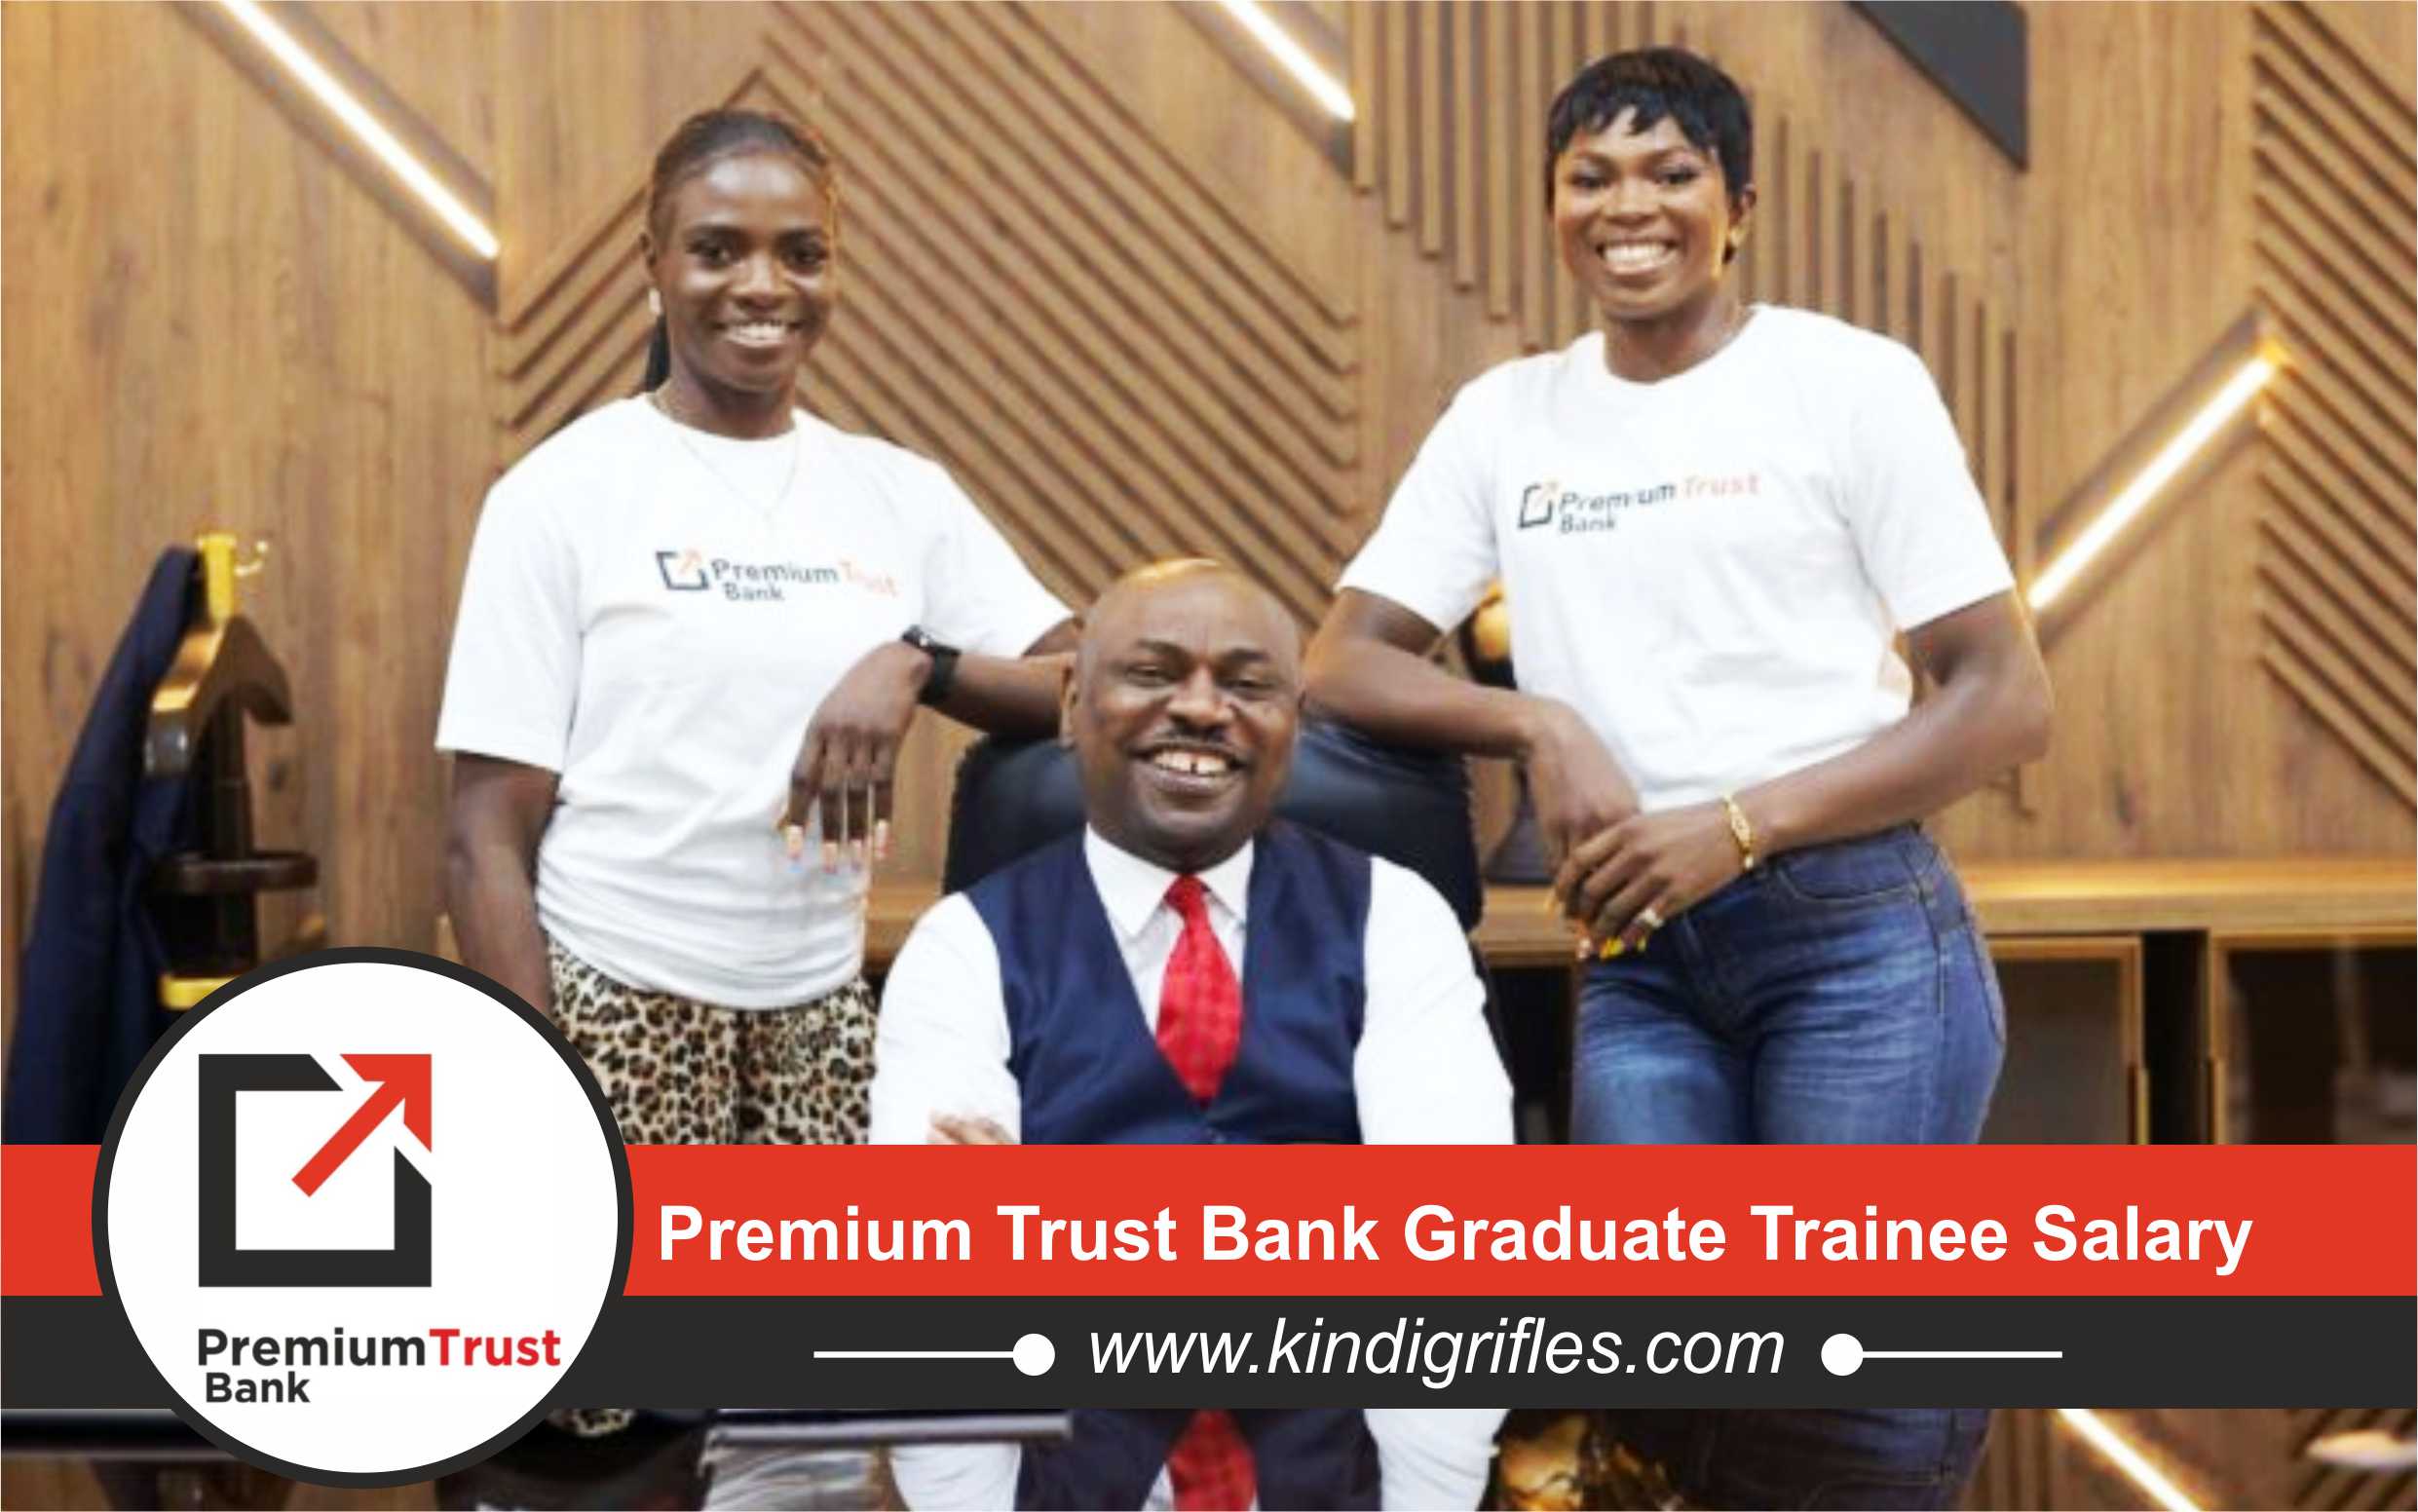 Premium Trust Bank Graduate Trainee Salary